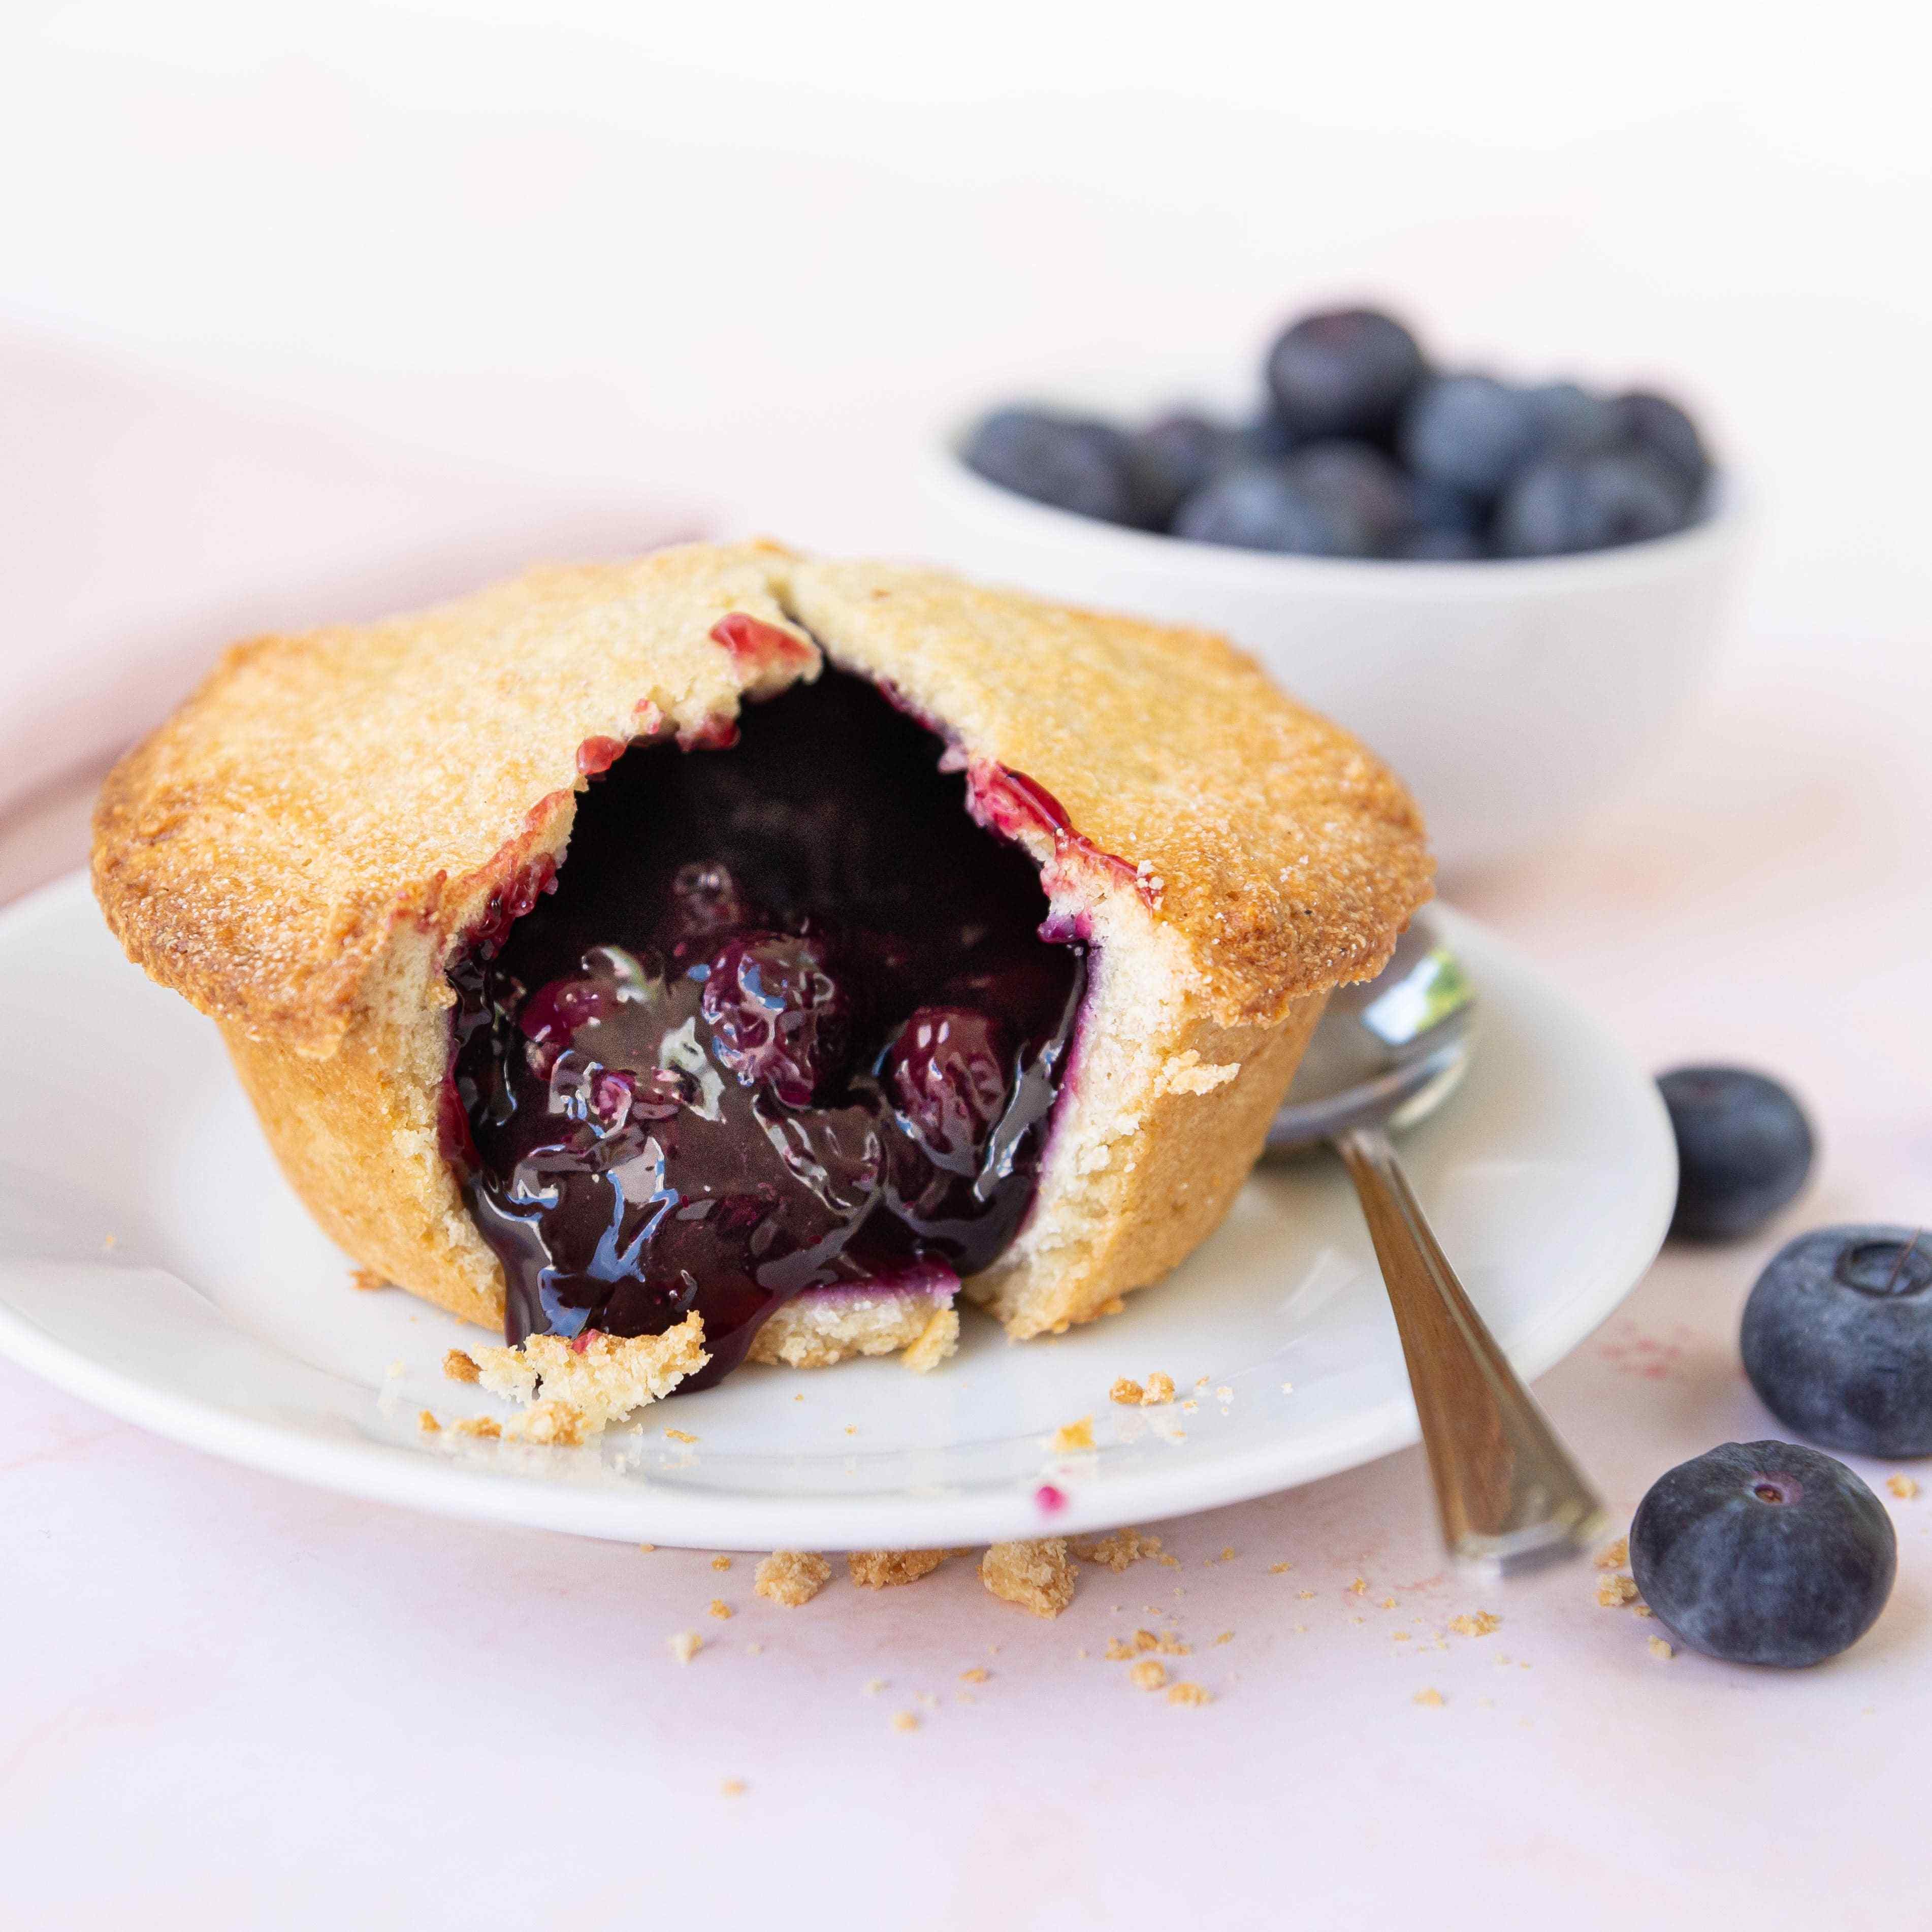 Blueberry Pie (Serves 2)